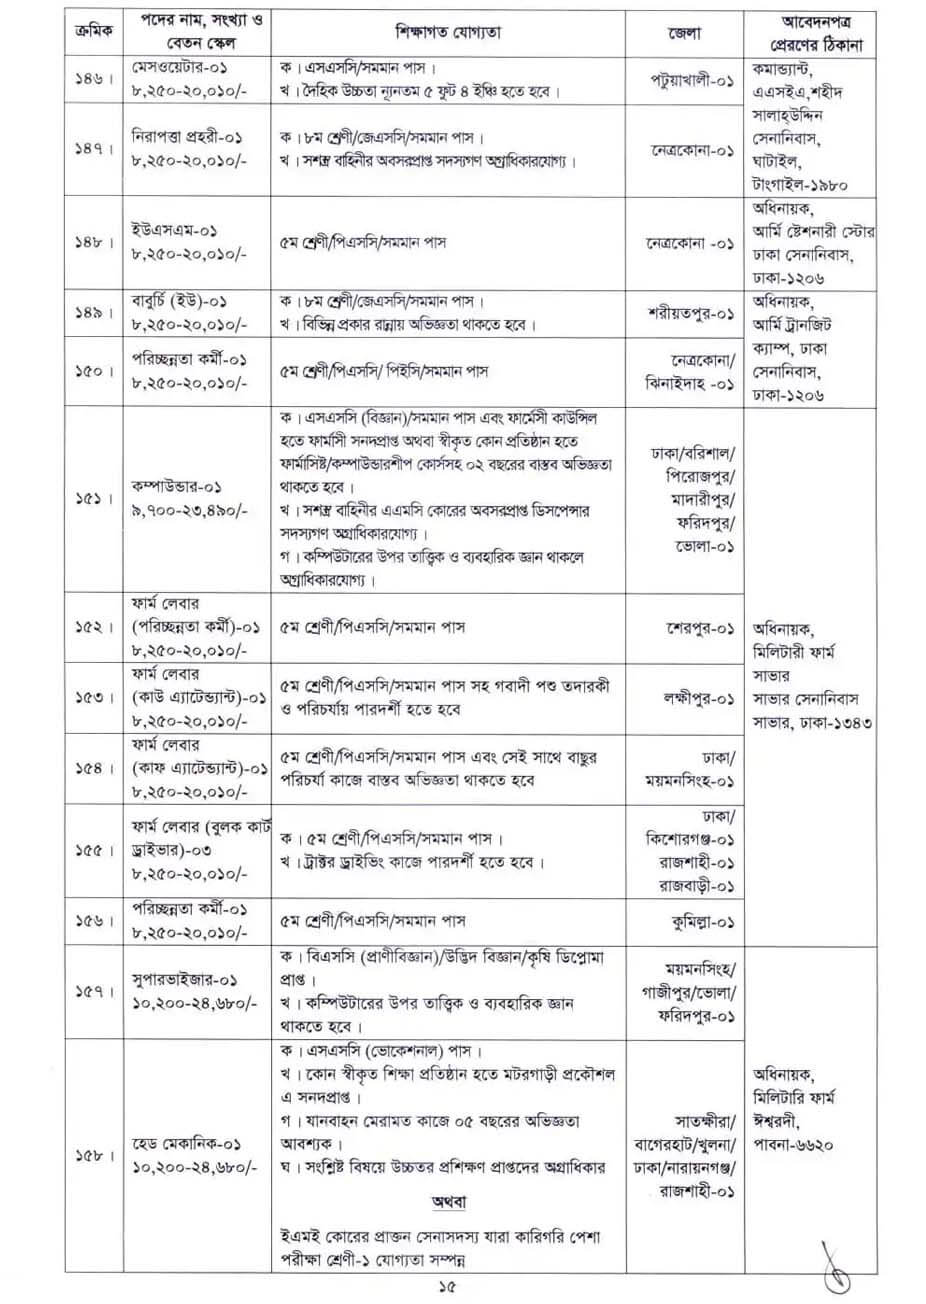 Bangladesh Army Civilian Job Circular 2022 1 16 - Jobsinfo24